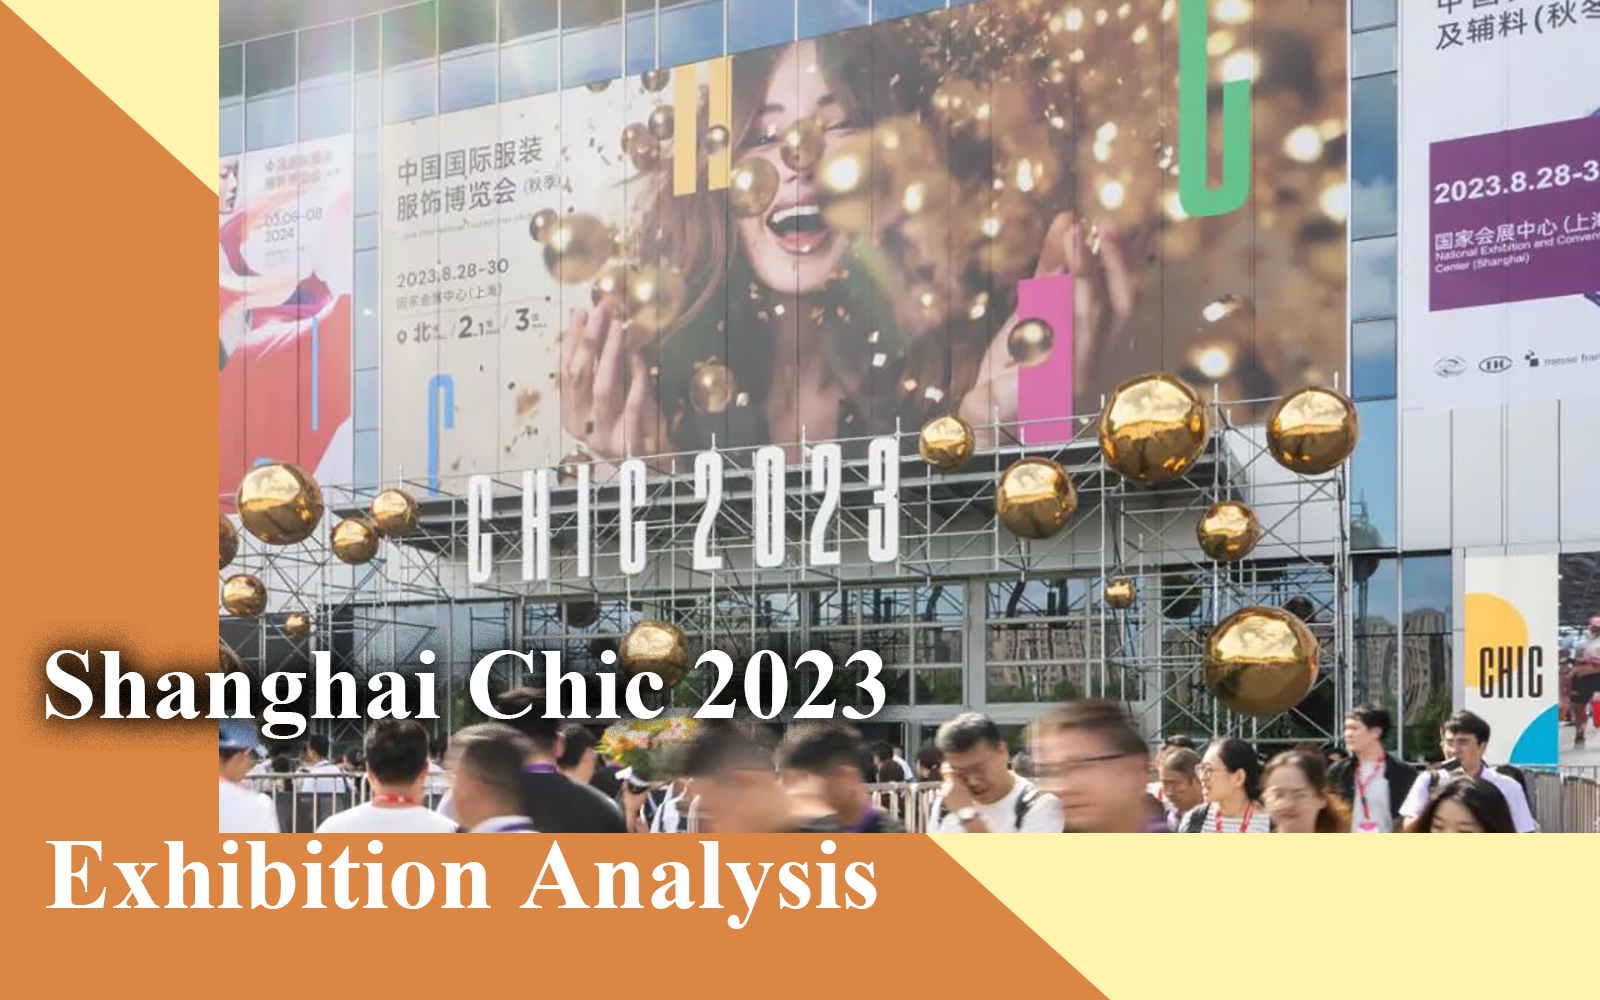 The Womenswear Exhibition Analysis of Shanghai CHIC 2023